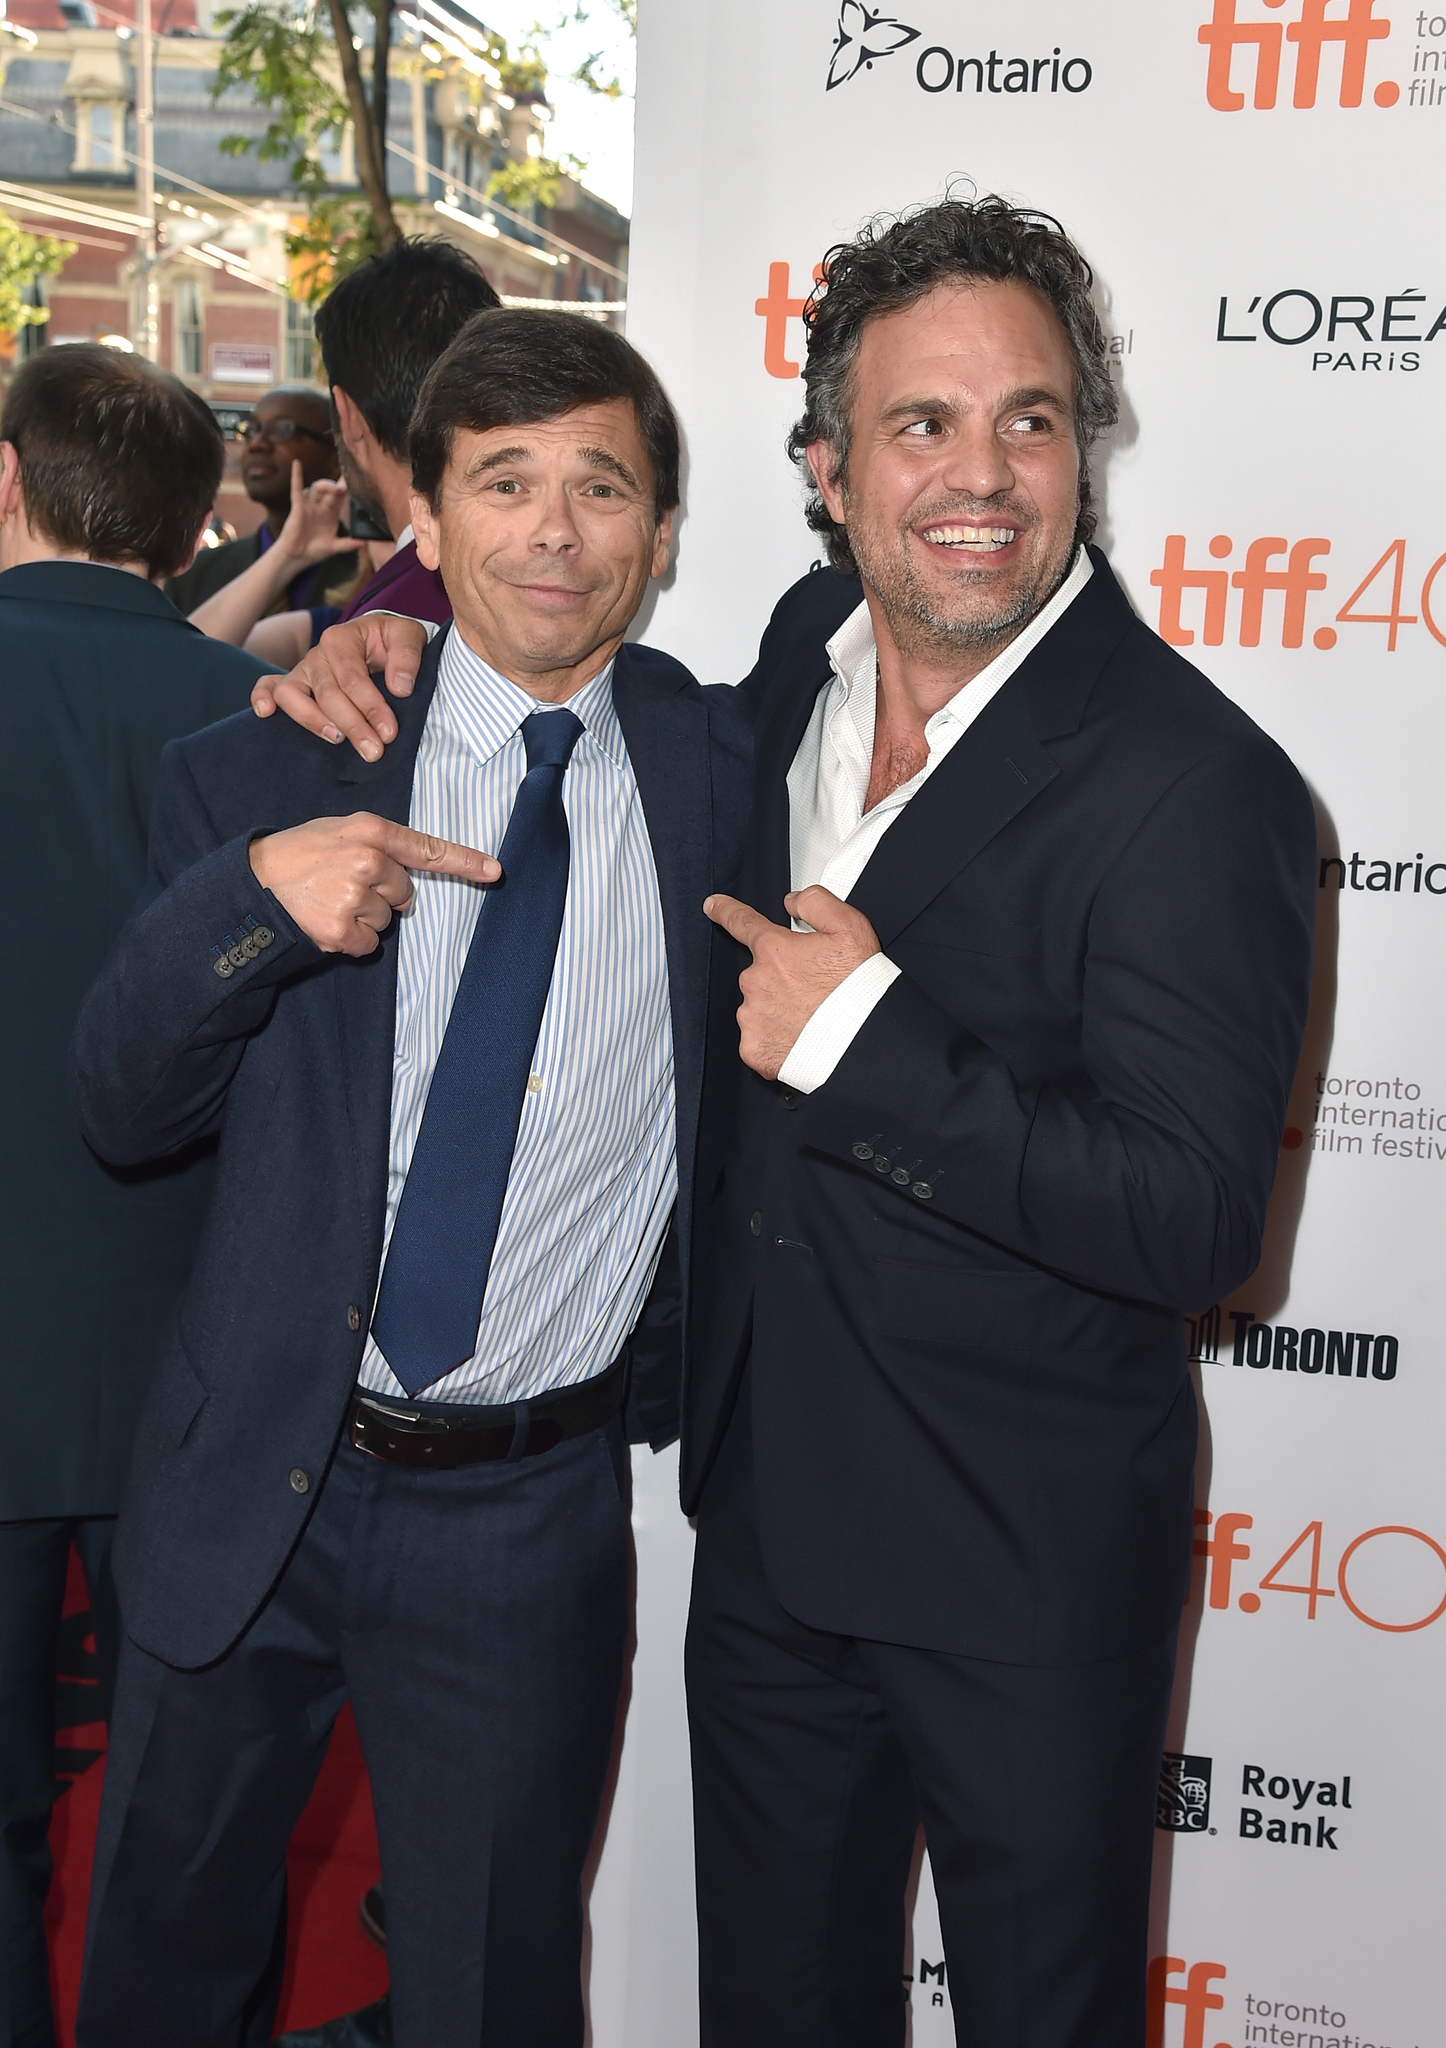 Mark Ruffalo and Michael Rezendes at event of Spotlight (2015)